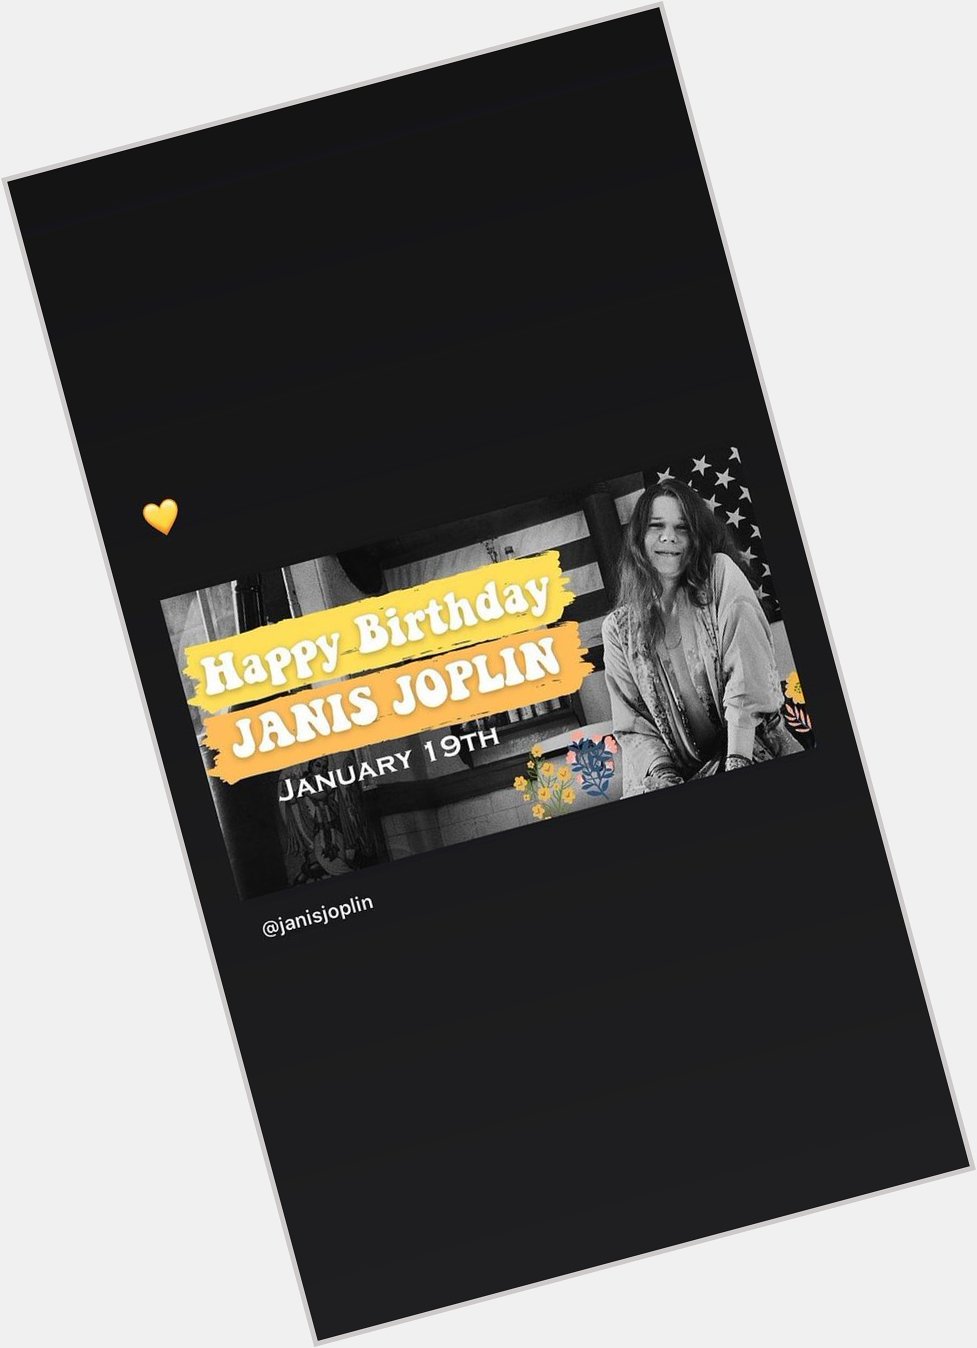 Happy Birthday Janis Joplin 
Instagram story 